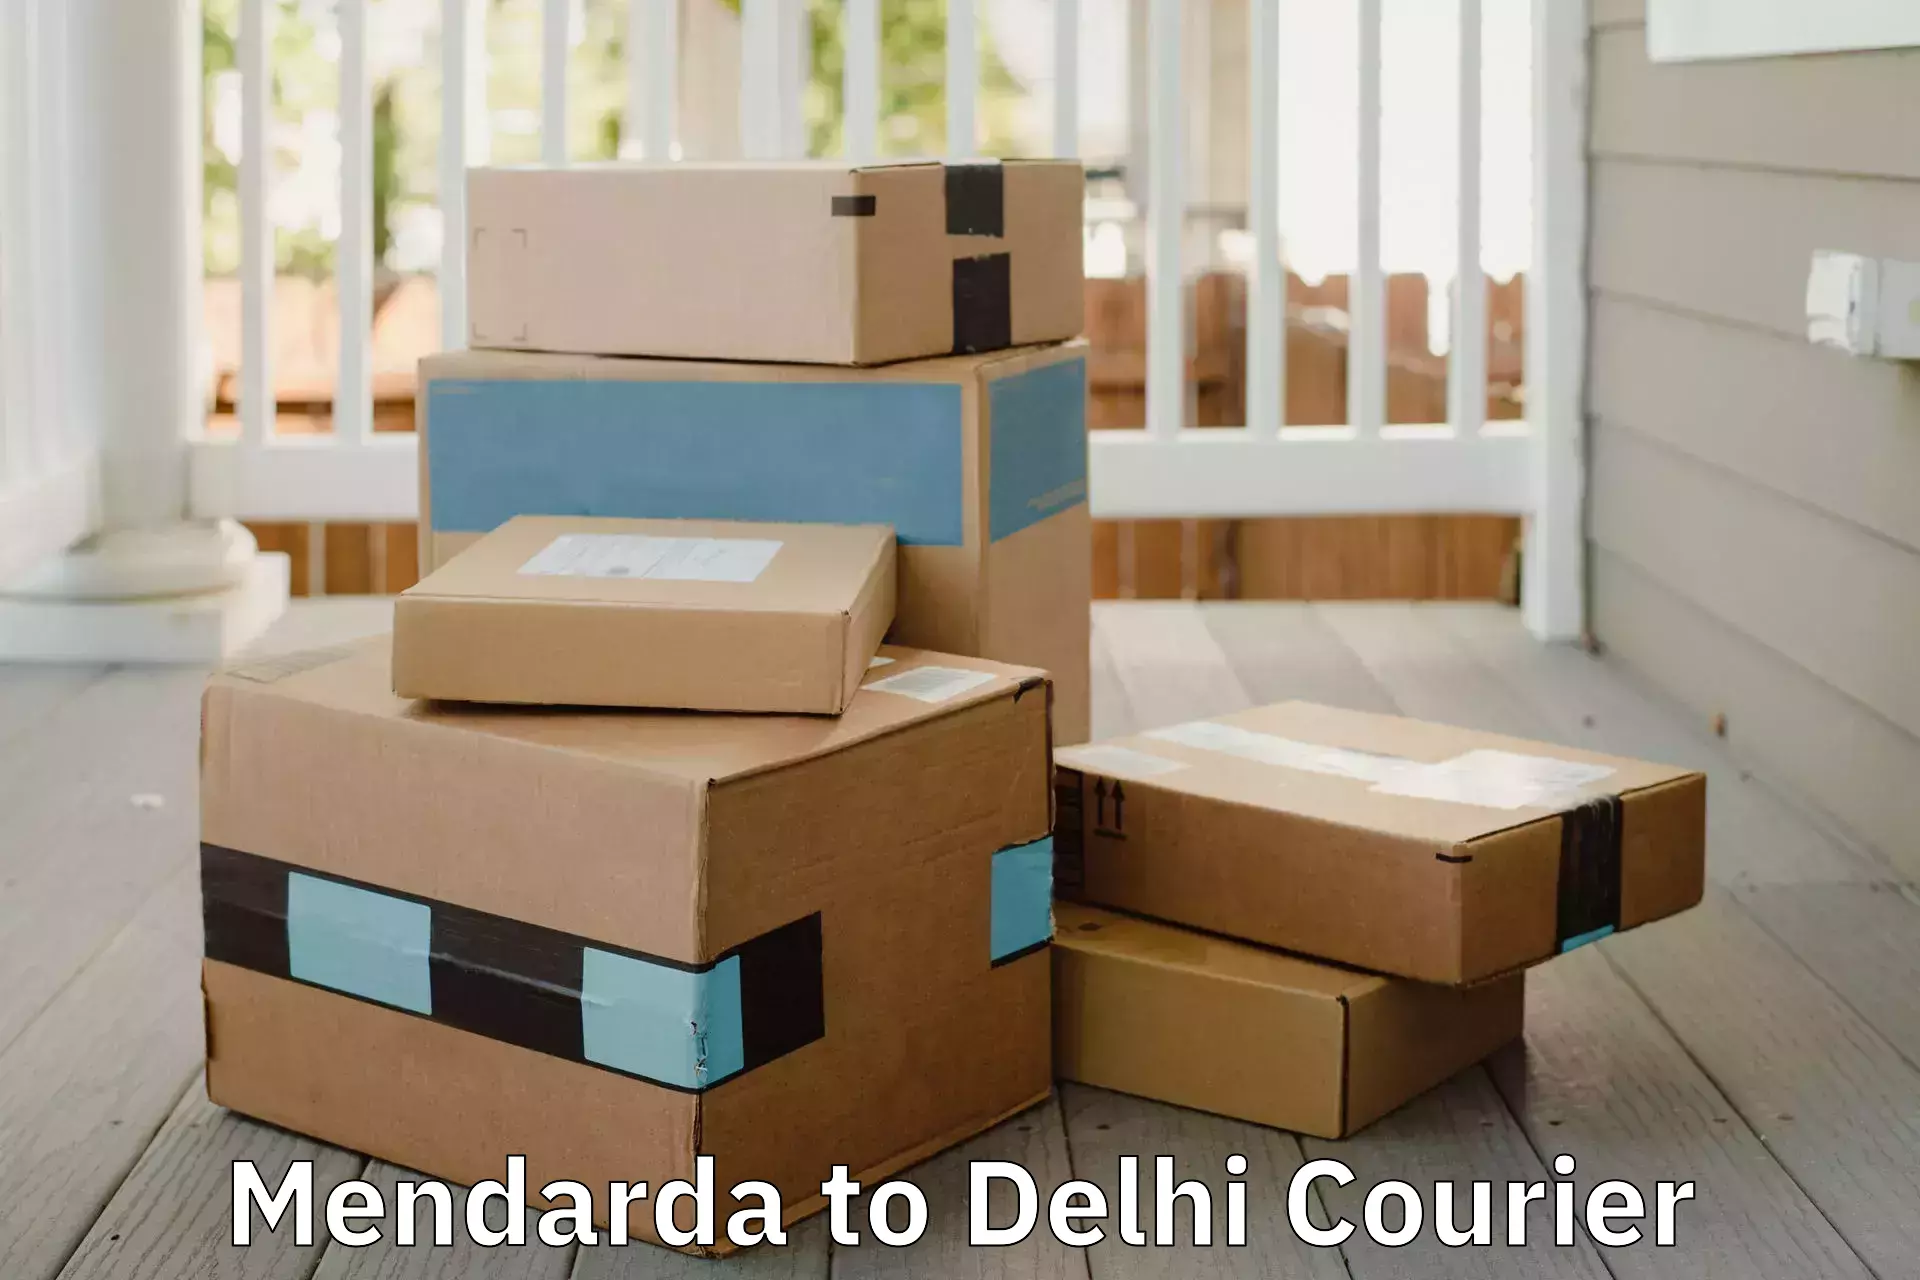 Professional moving company Mendarda to Delhi